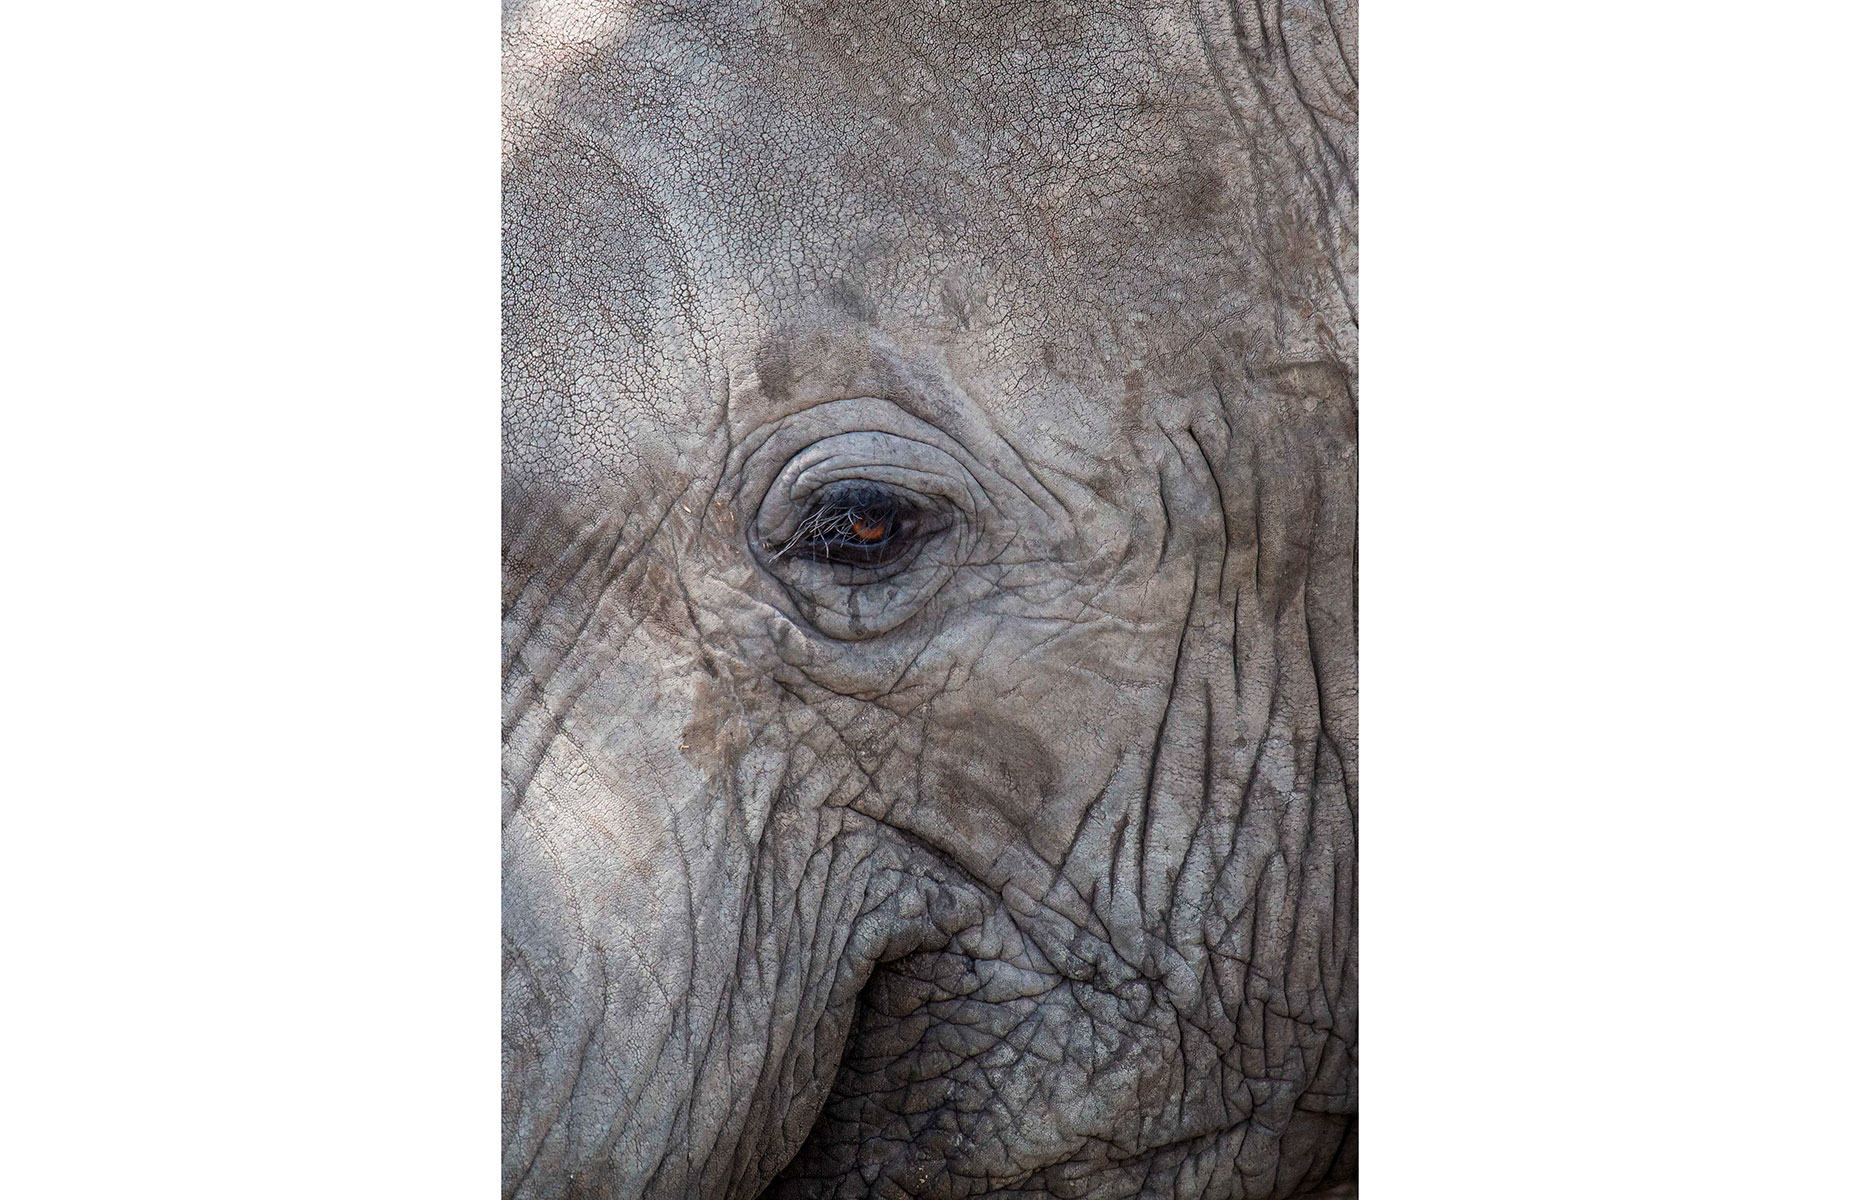 Elephant's eye detail (Image: Copyright Nori Jemil)